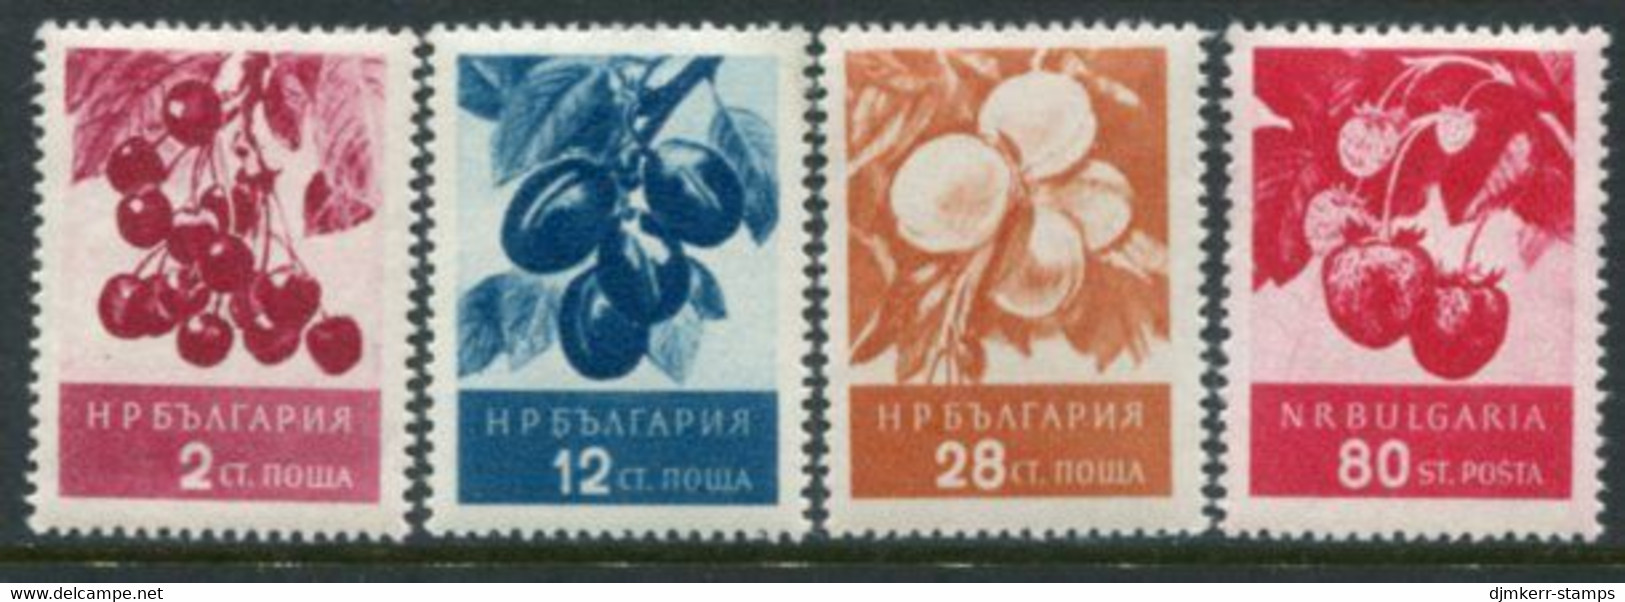 BULGARIA 1956 Fruits II MNH / **.  Michel 990-93 - Ungebraucht